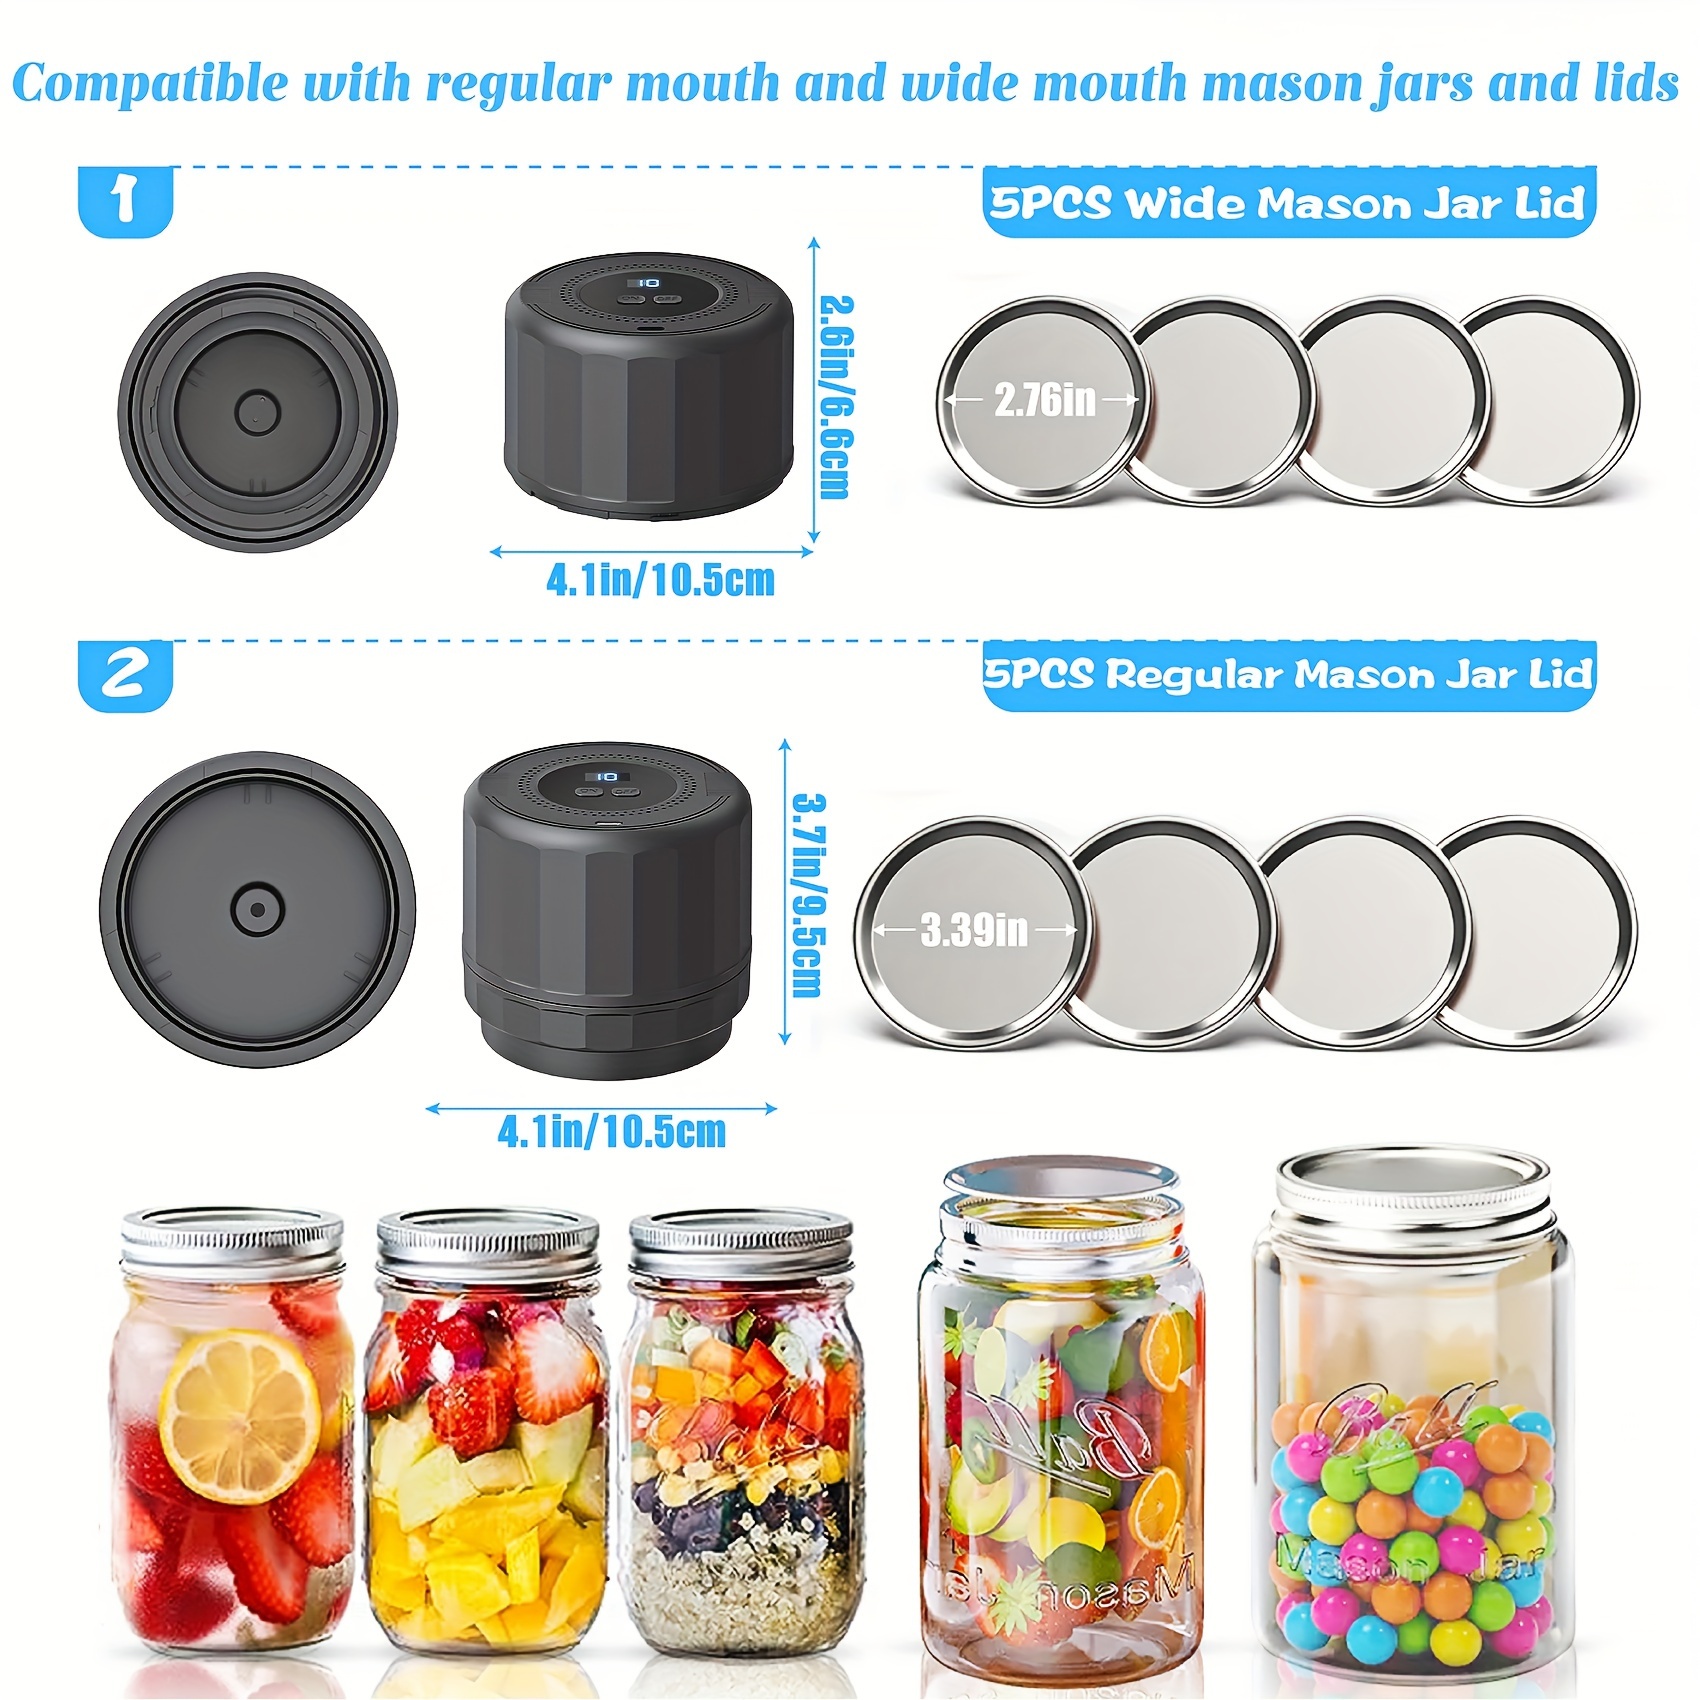 Electric Mason Jar Vacuum Sealer-Mason Jar Vacuum Sealer Kit for Food Storage Compatible Wide & Regular Mouth Mason Lids- Canning Vacuum Sealer